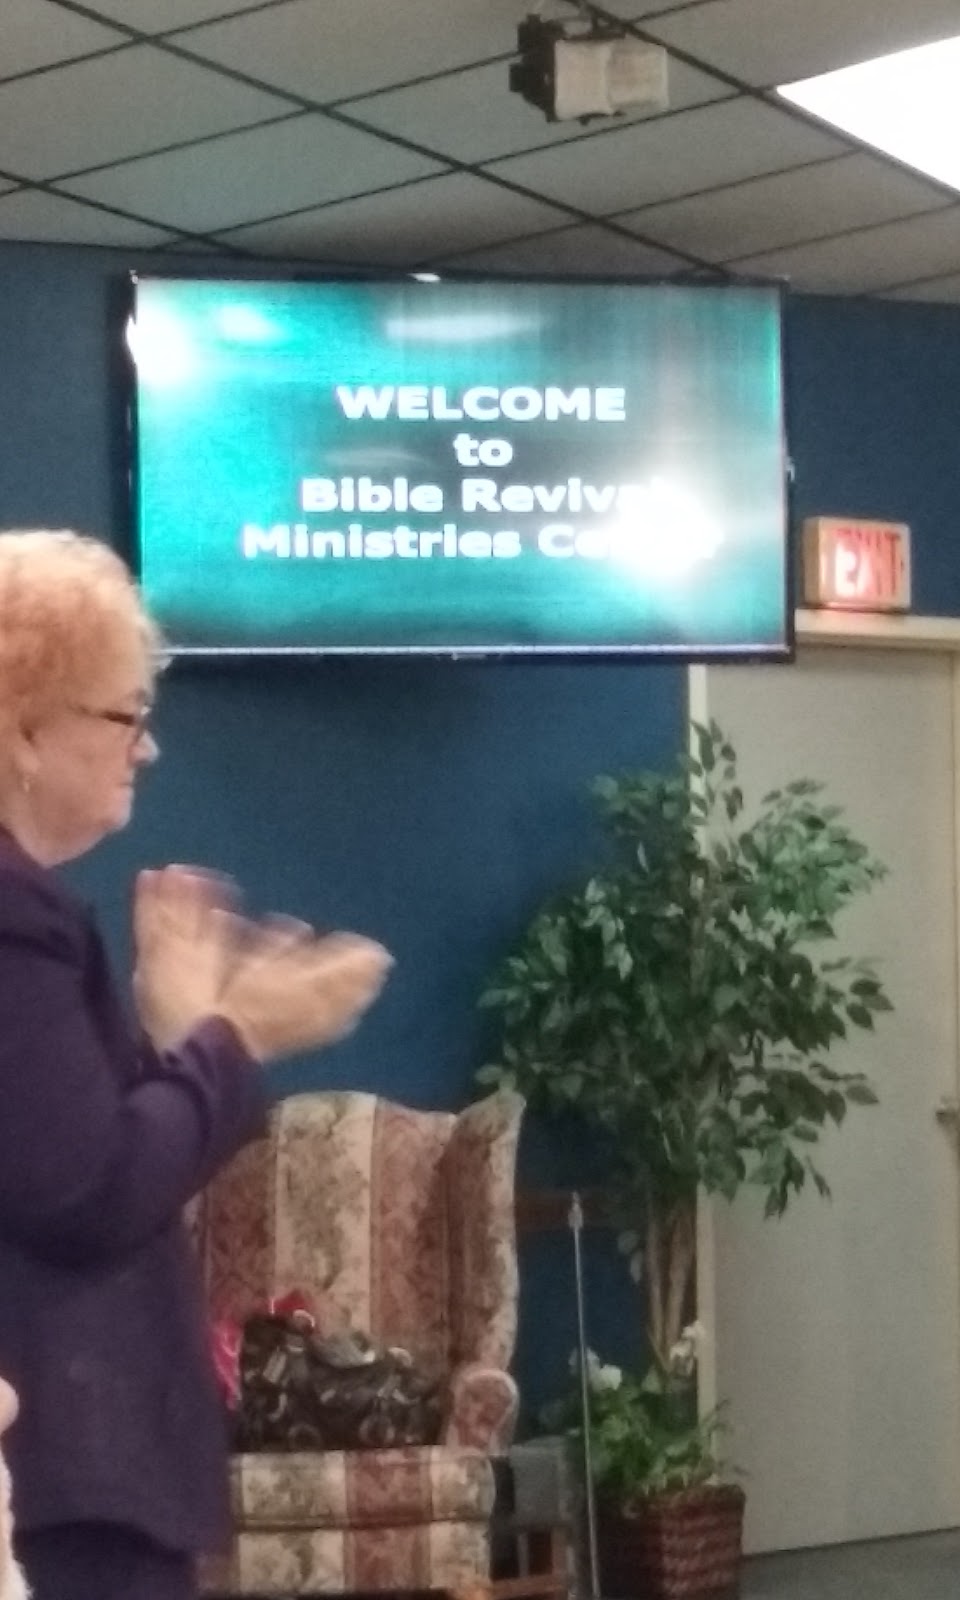 Bible Revival Ministries Center | 1475 N Main St #9865, Kernersville, NC 27284 | Phone: (336) 996-8904